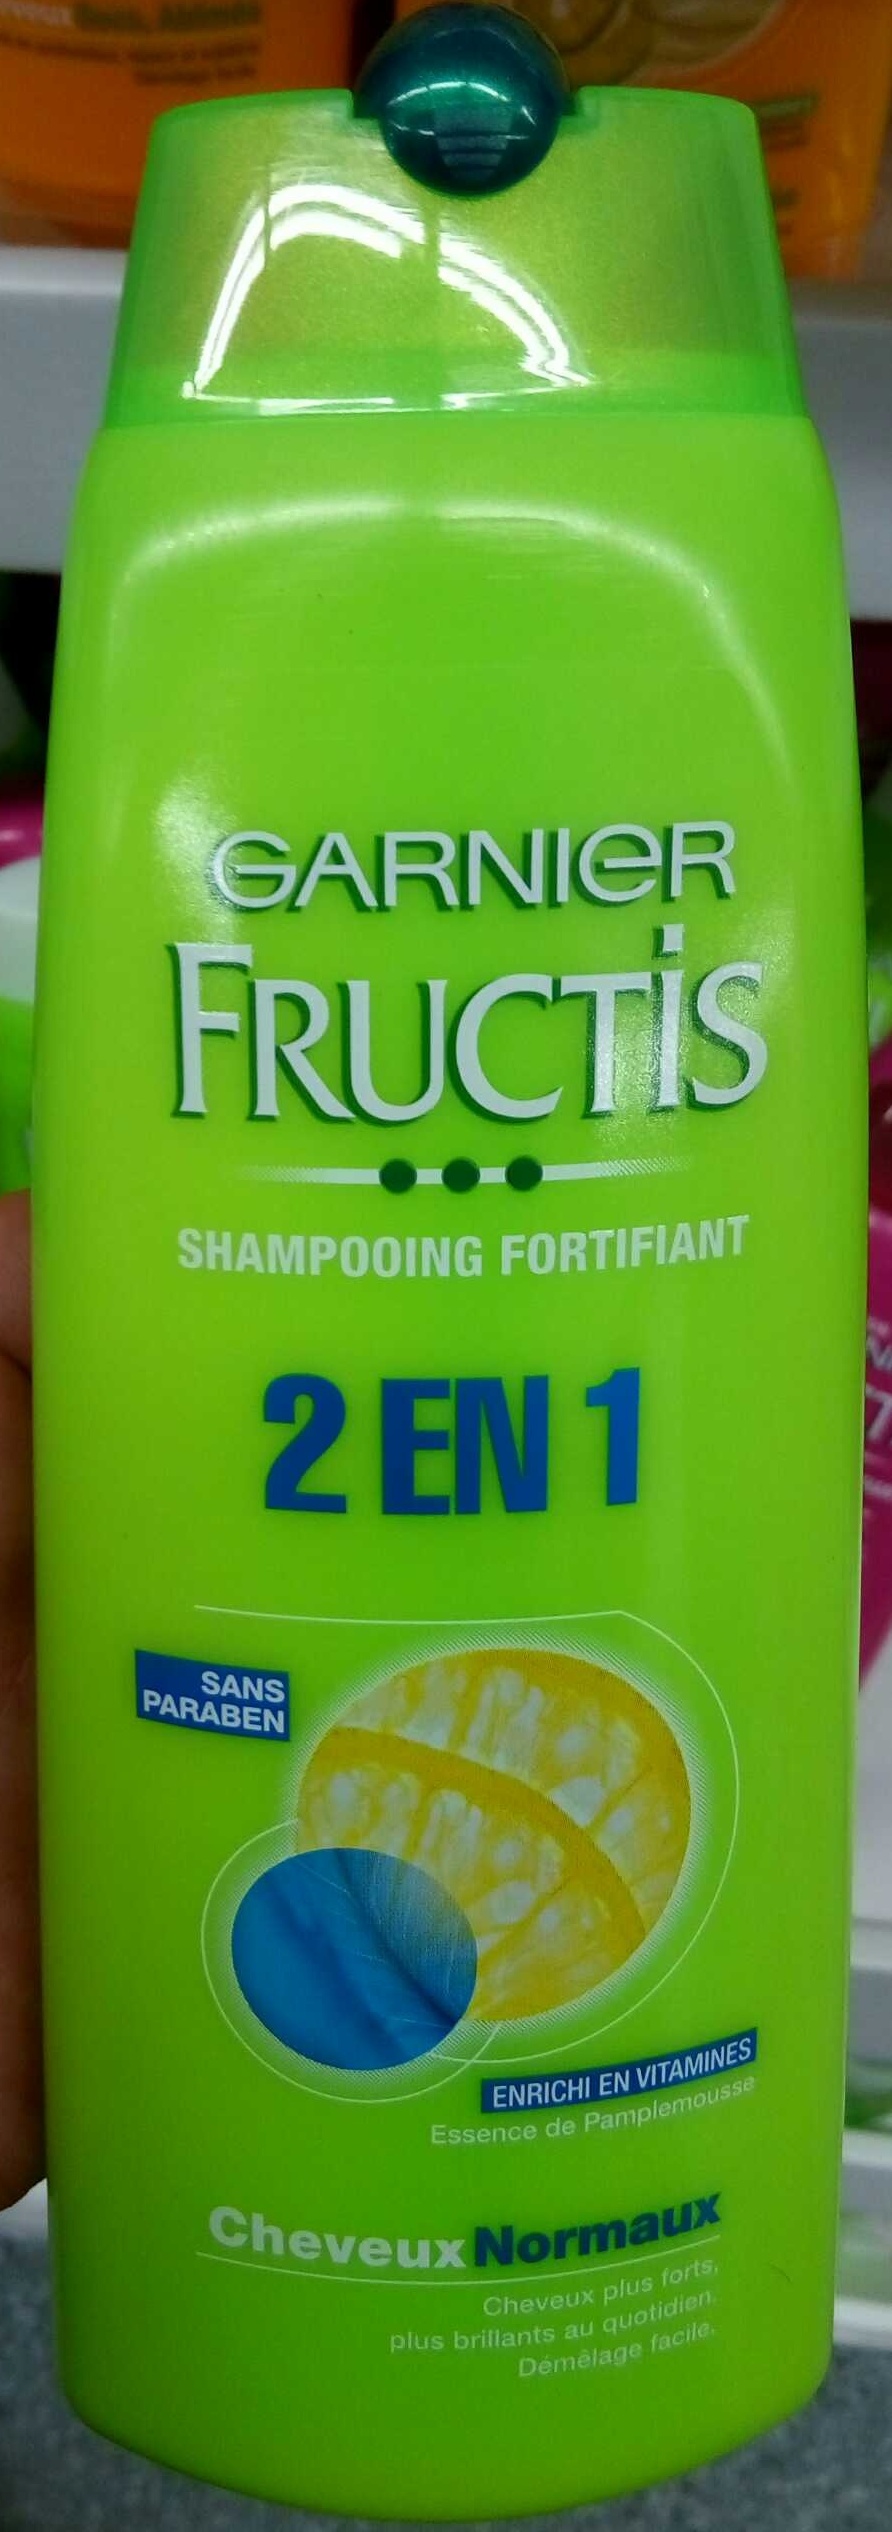 Fructis Shampooing fortifiant 2 en 1 - Produto - fr